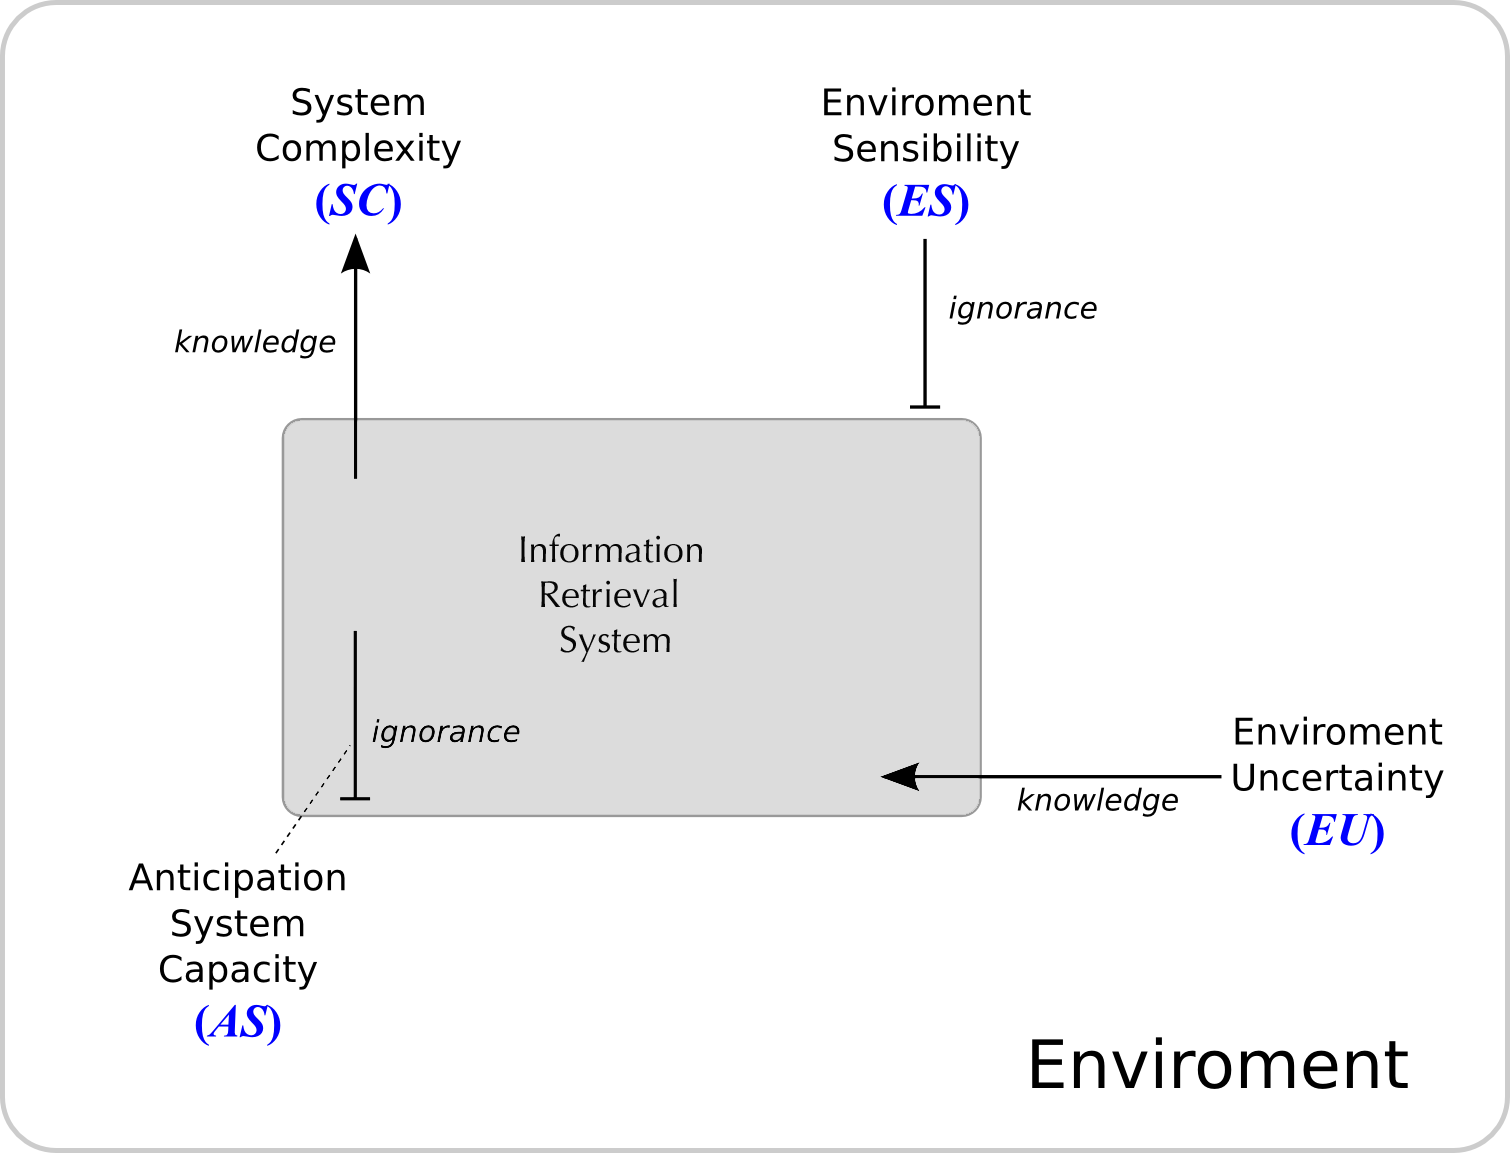 The information retrieval Ecosystem